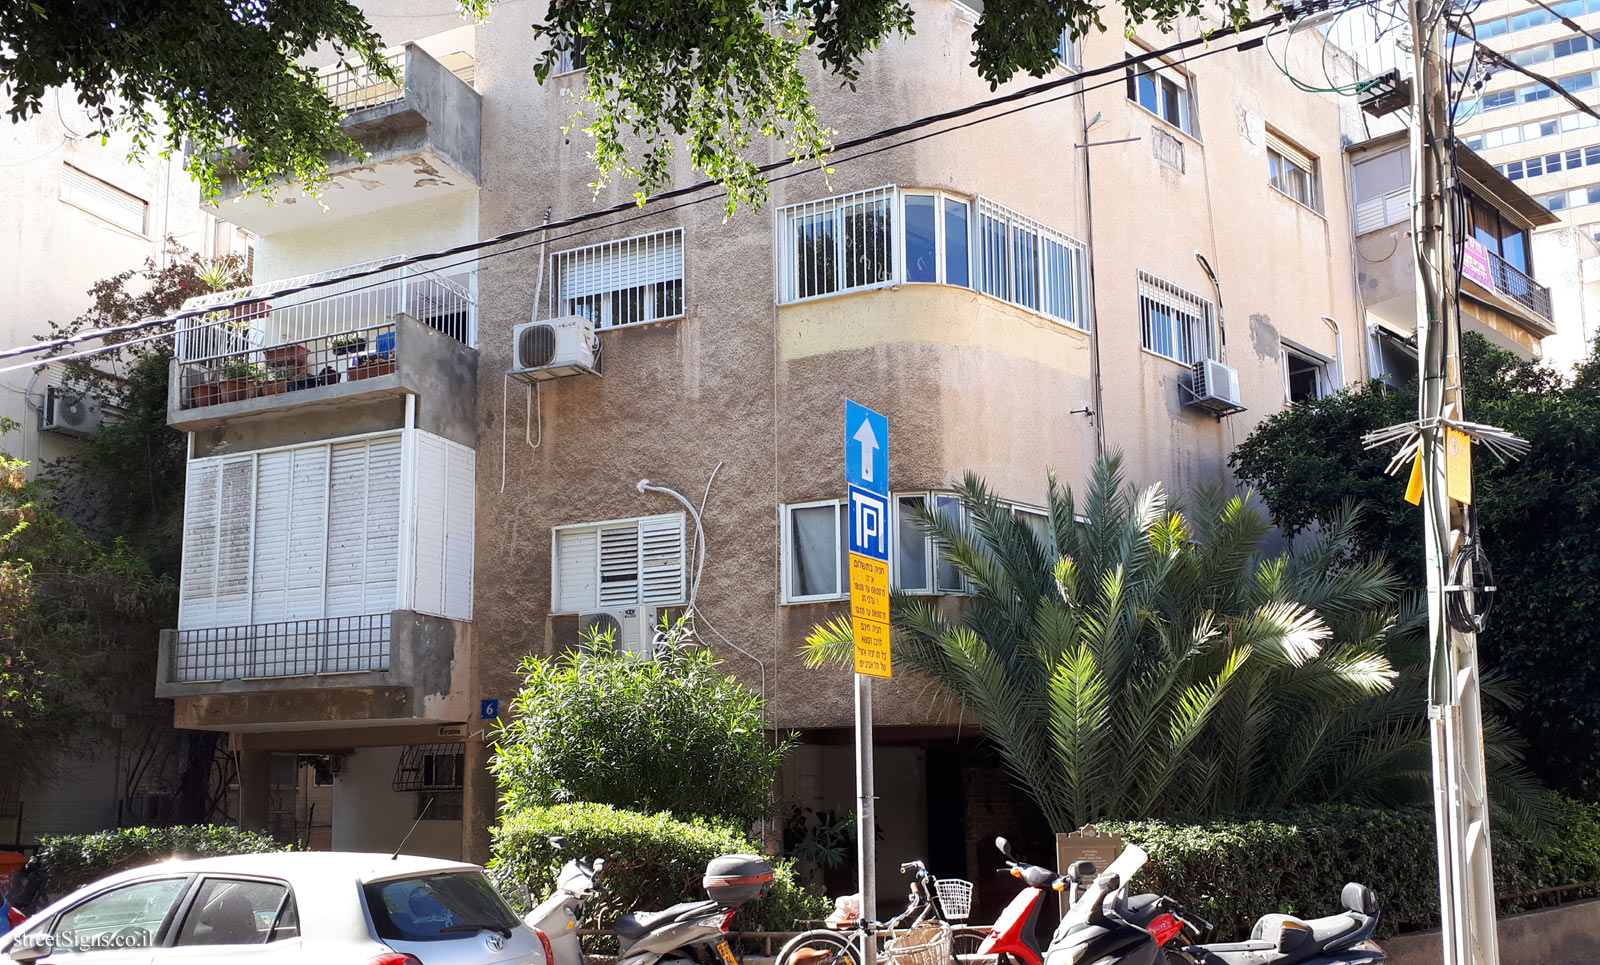 The Irgun Headquarters 1938-1939 - Aharonovich St 6, Tel Aviv-Yafo, Israel